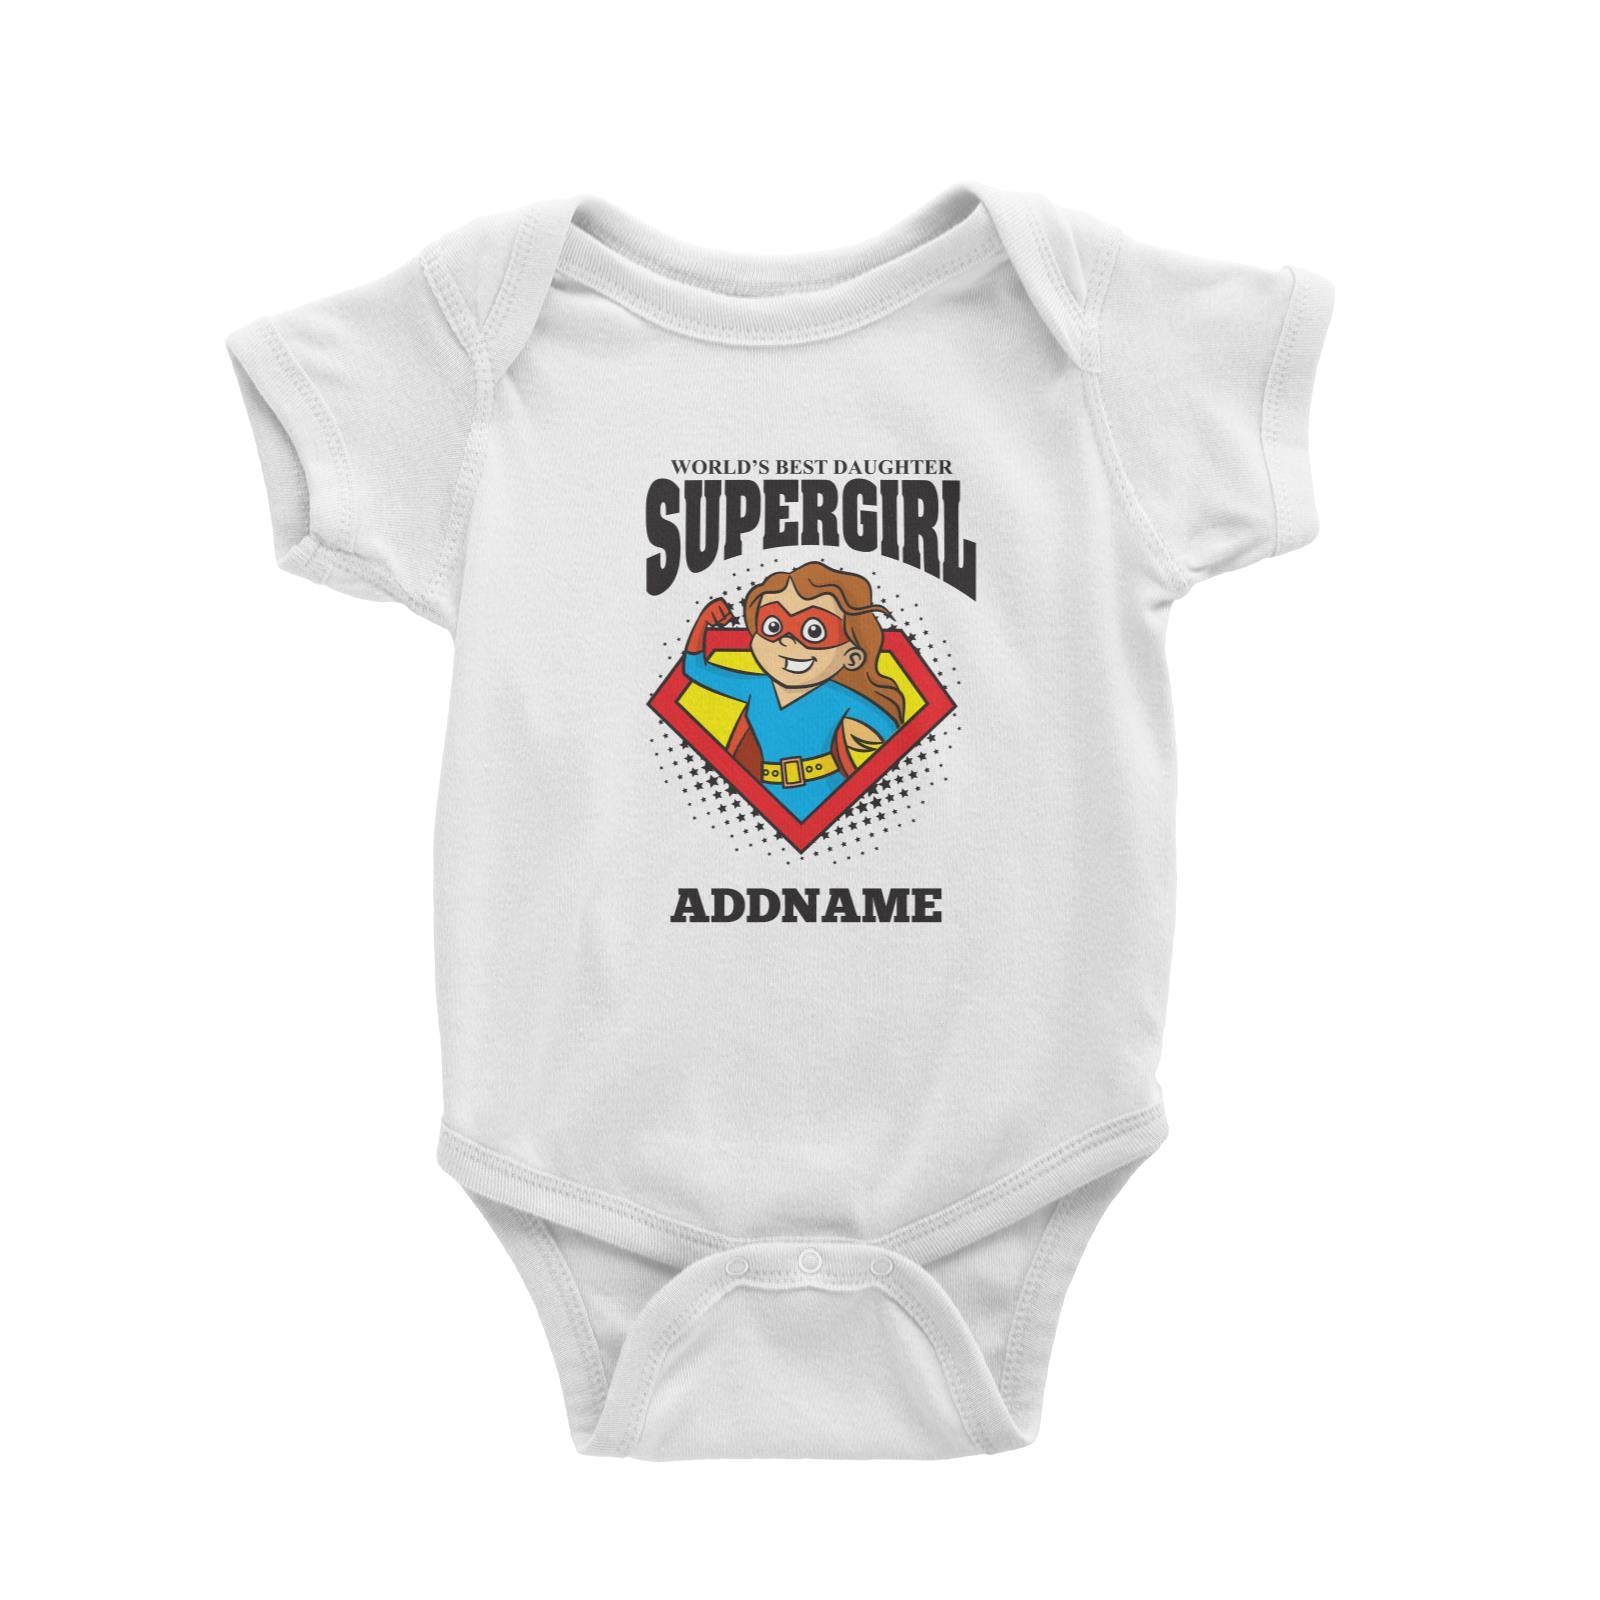 Best Daughter Supergirl Girl Baby Romper Personalizable Designs Matching Family Superhero Family Edition Superhero